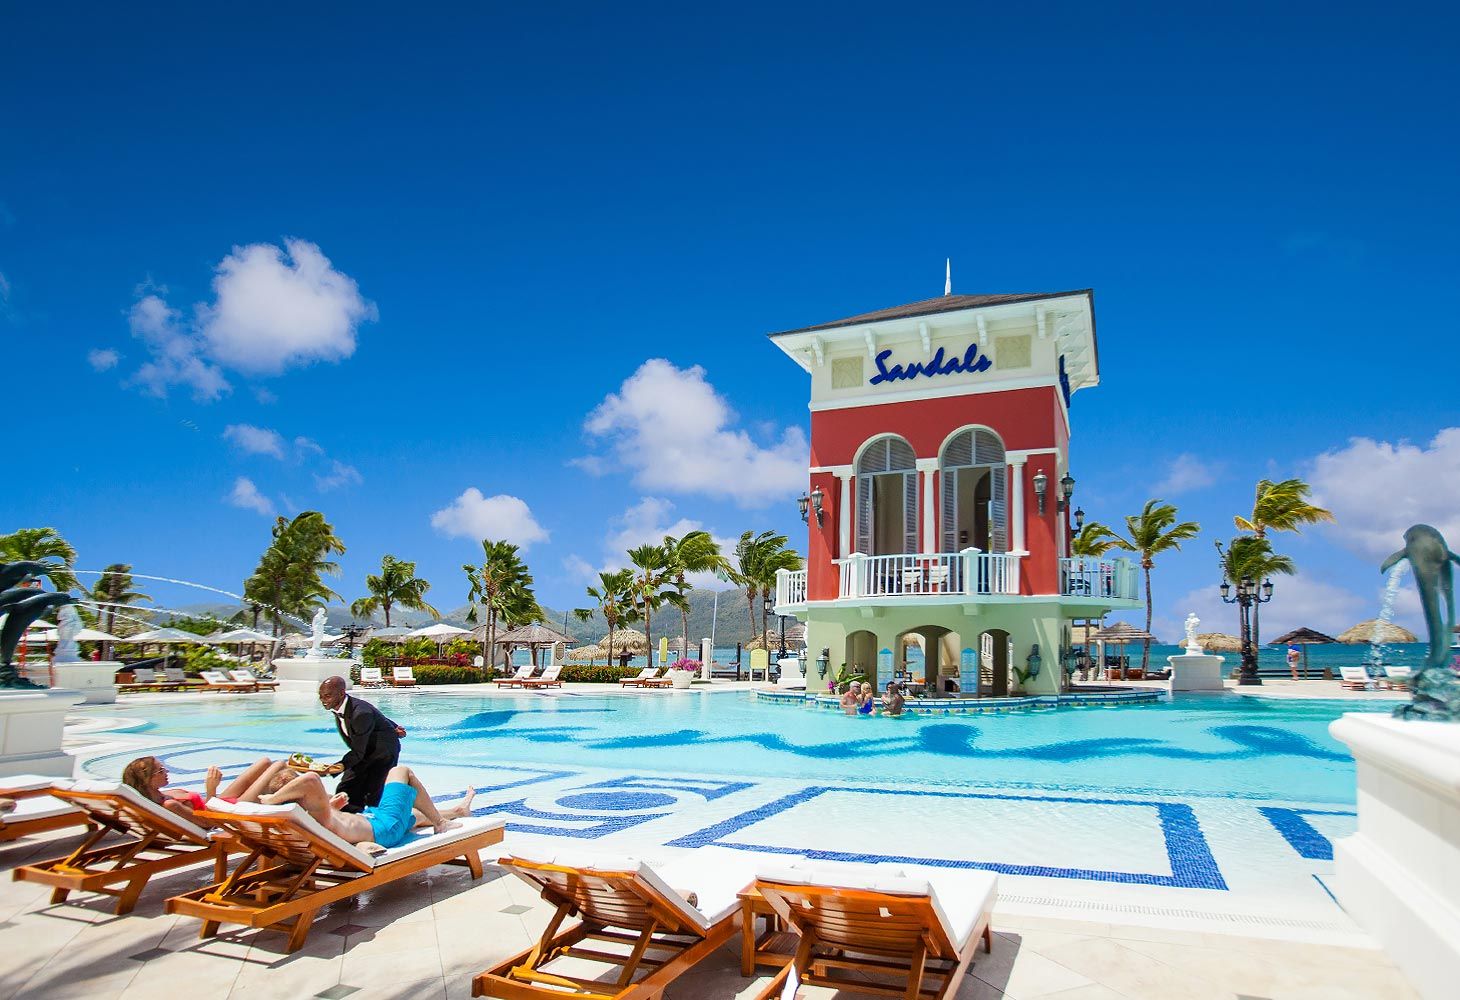 Which Sandals Resort has the best beach?